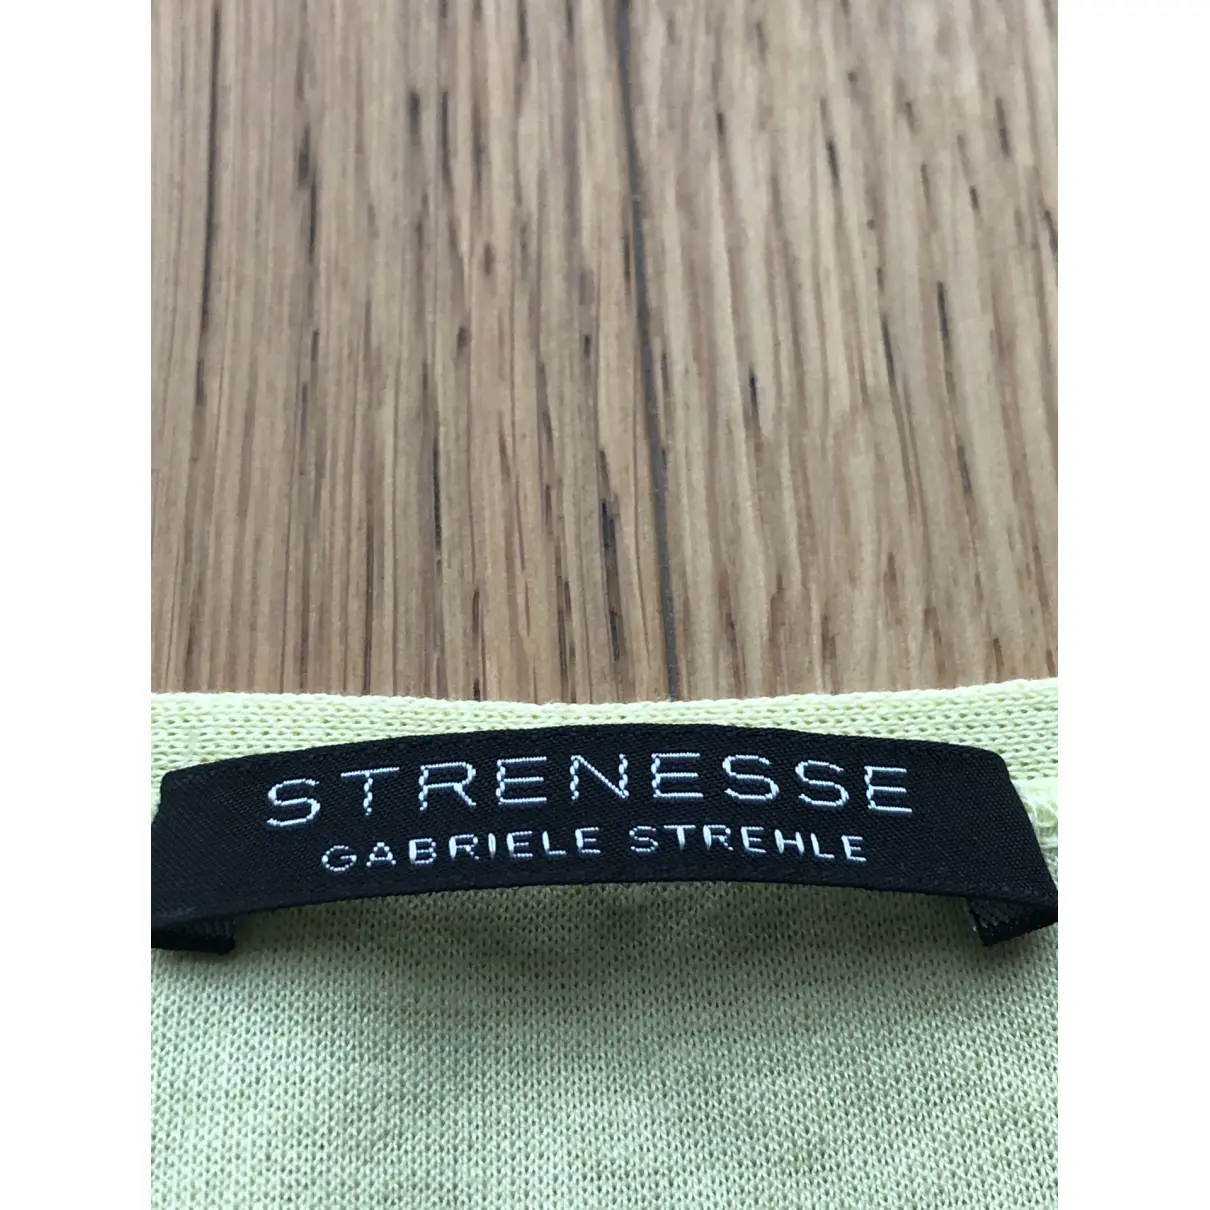 Buy Strenesse T-shirt online